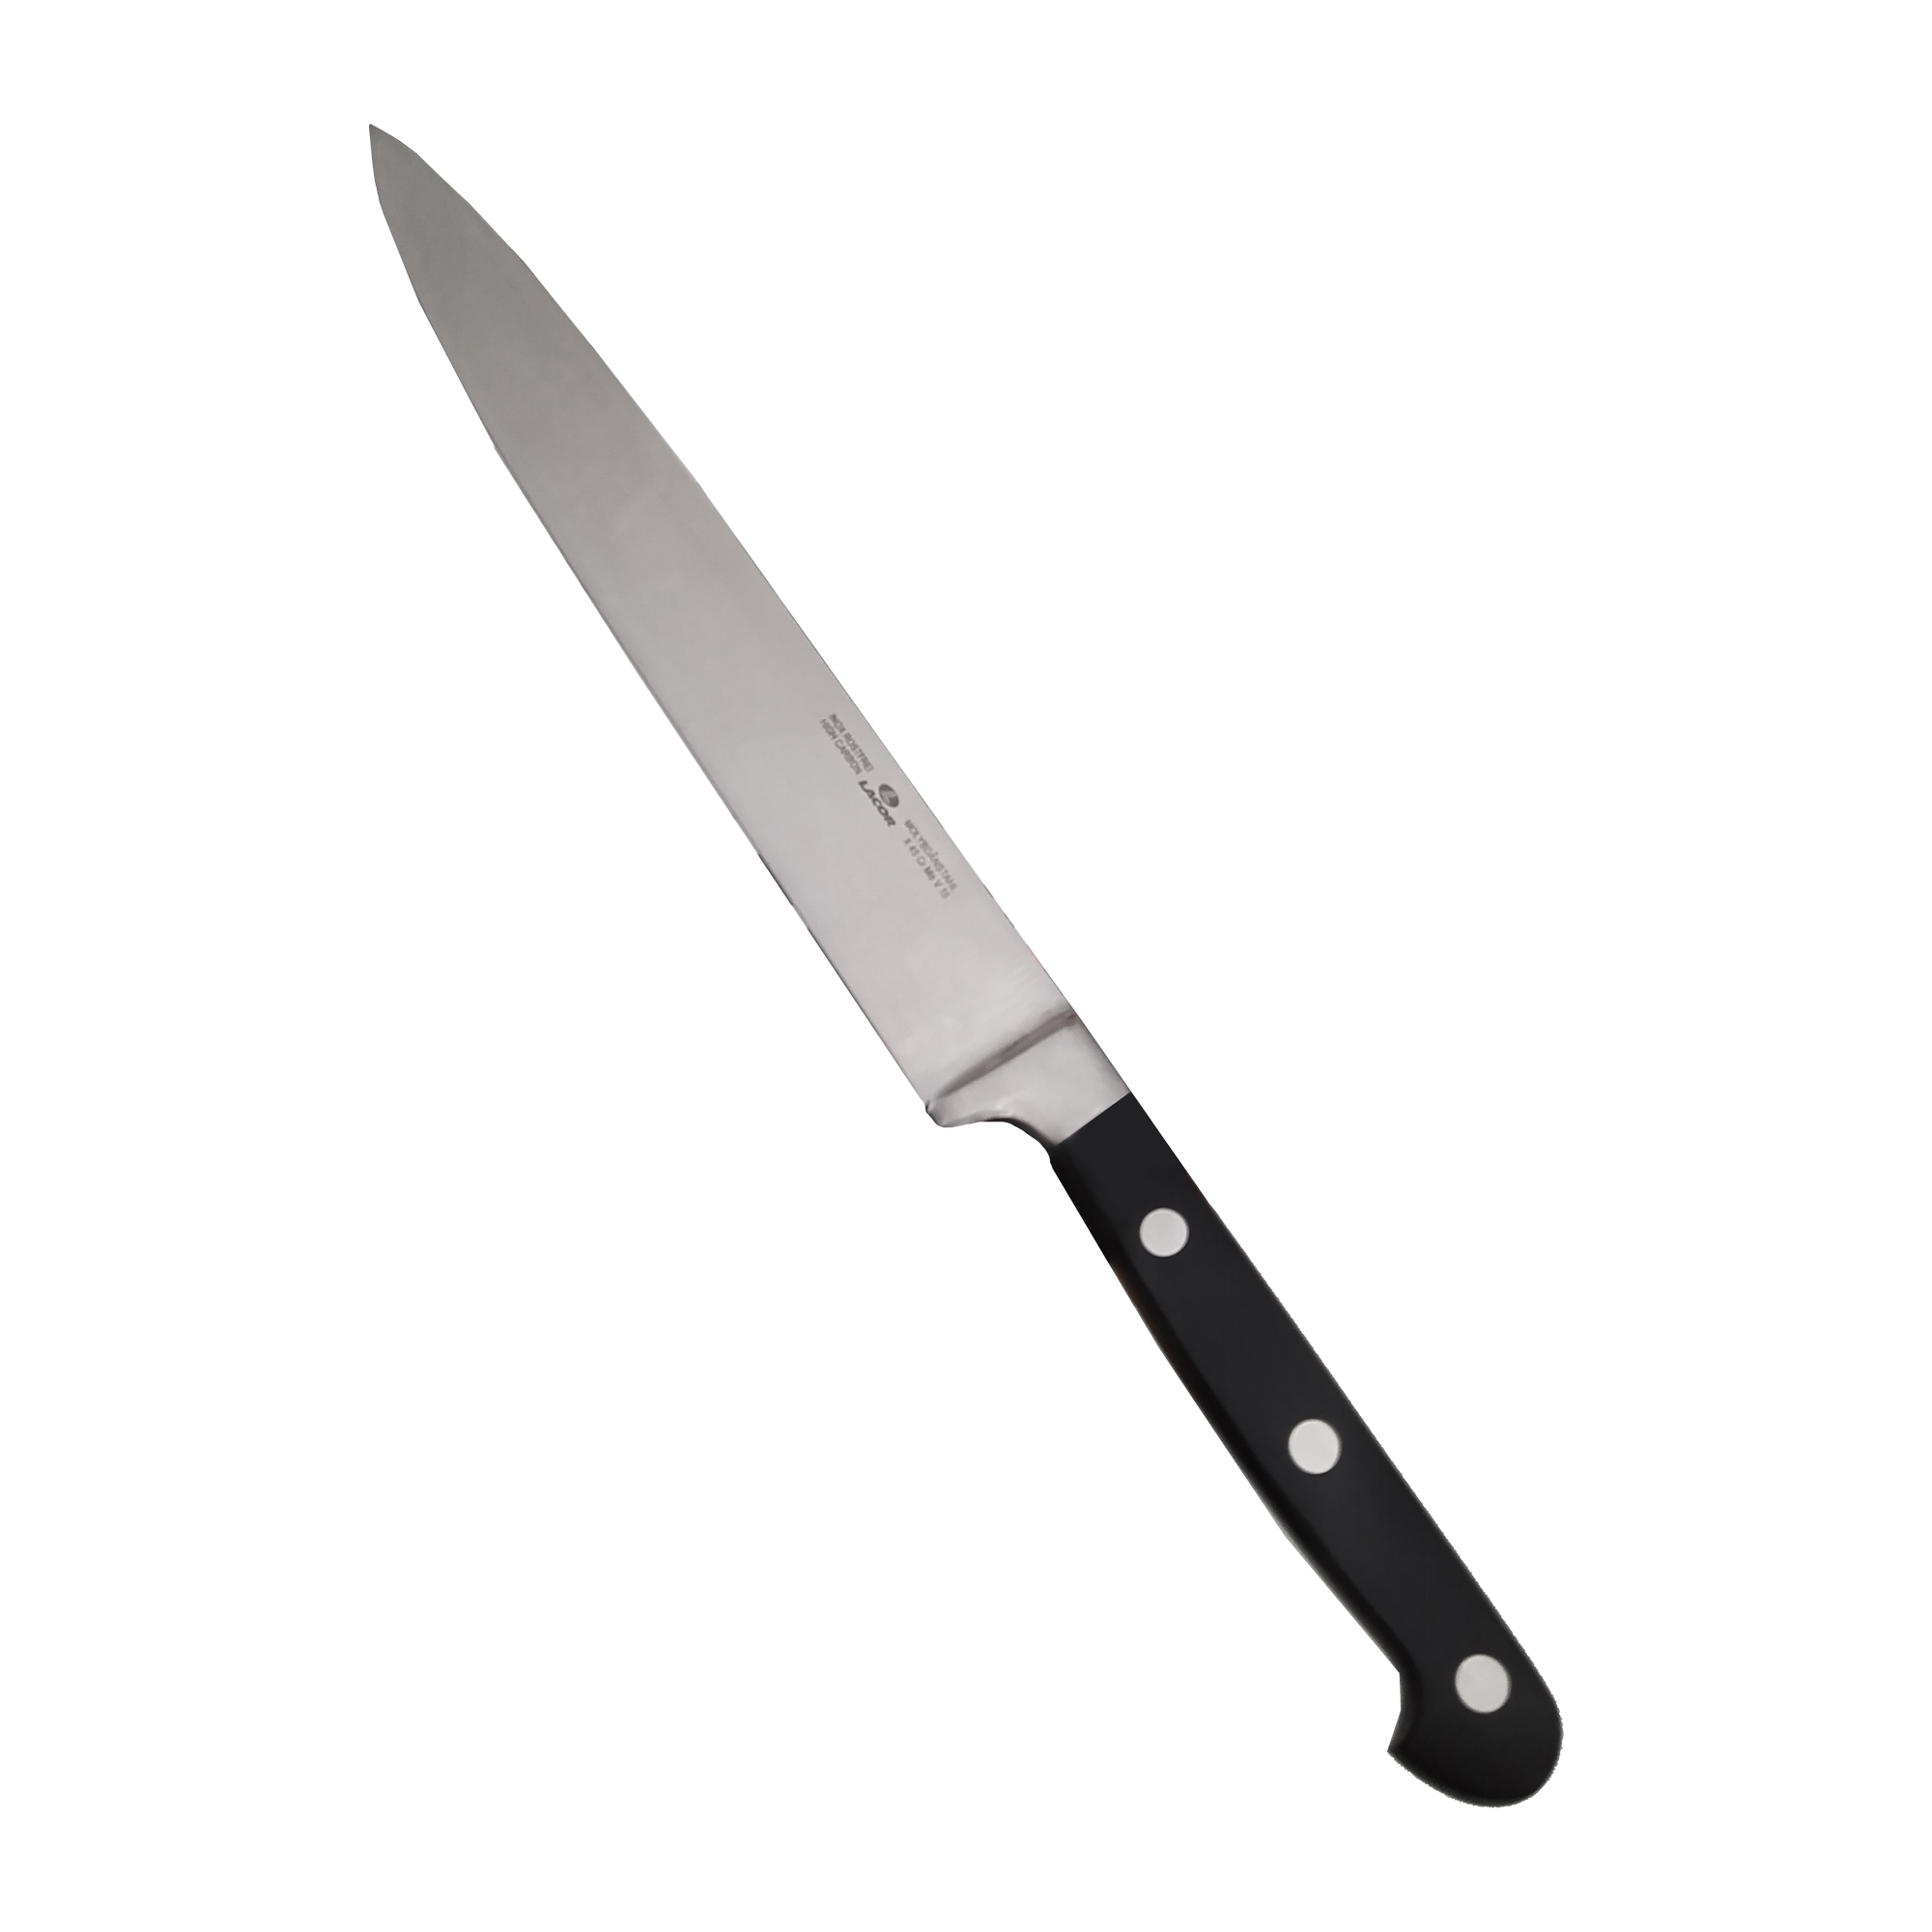 چاقو آشپزخانه لاکور مدل 39125